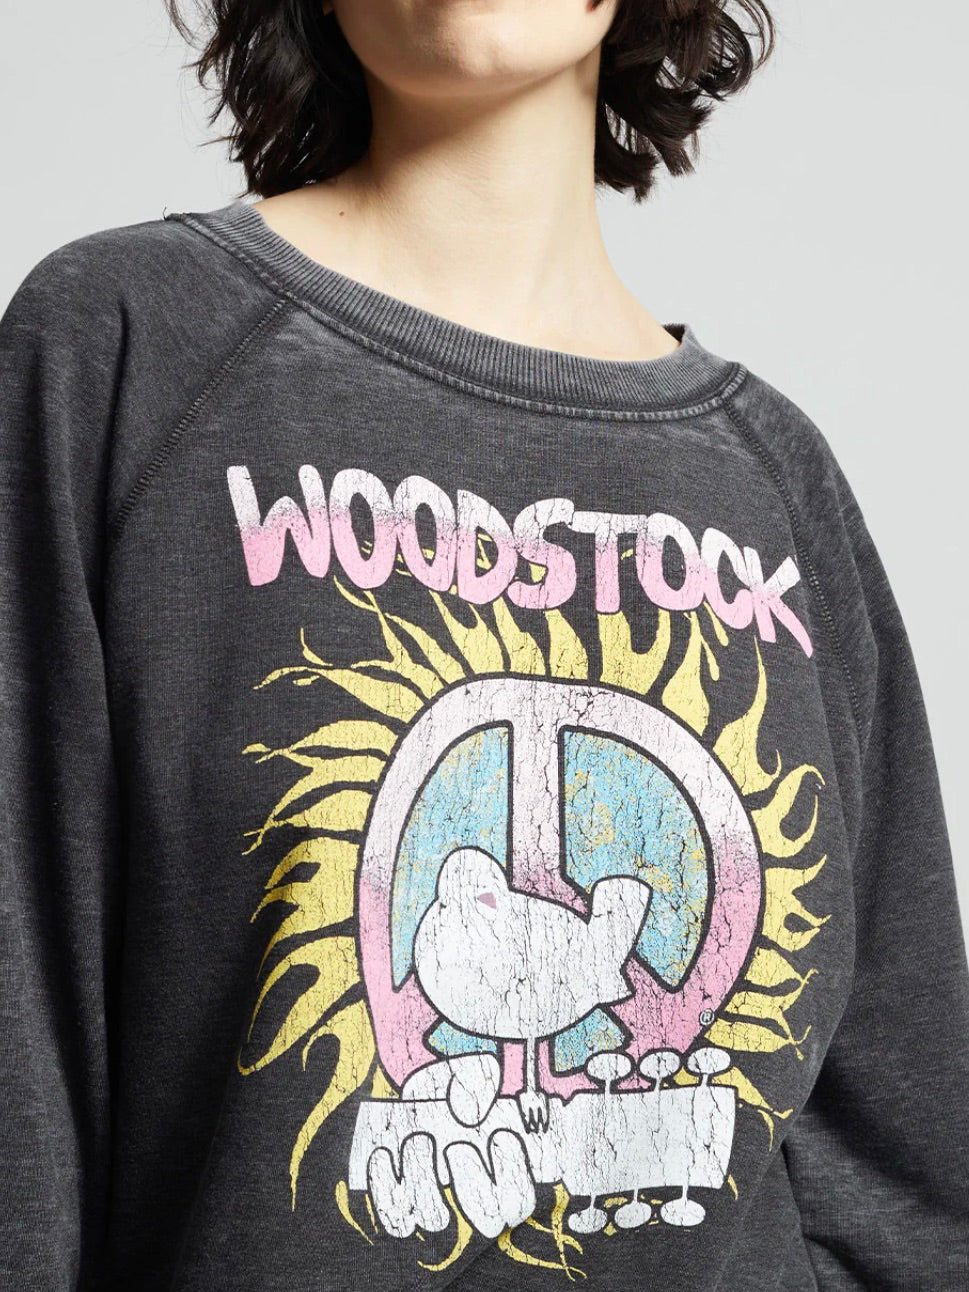 Woodstock Sun Sweatshirt